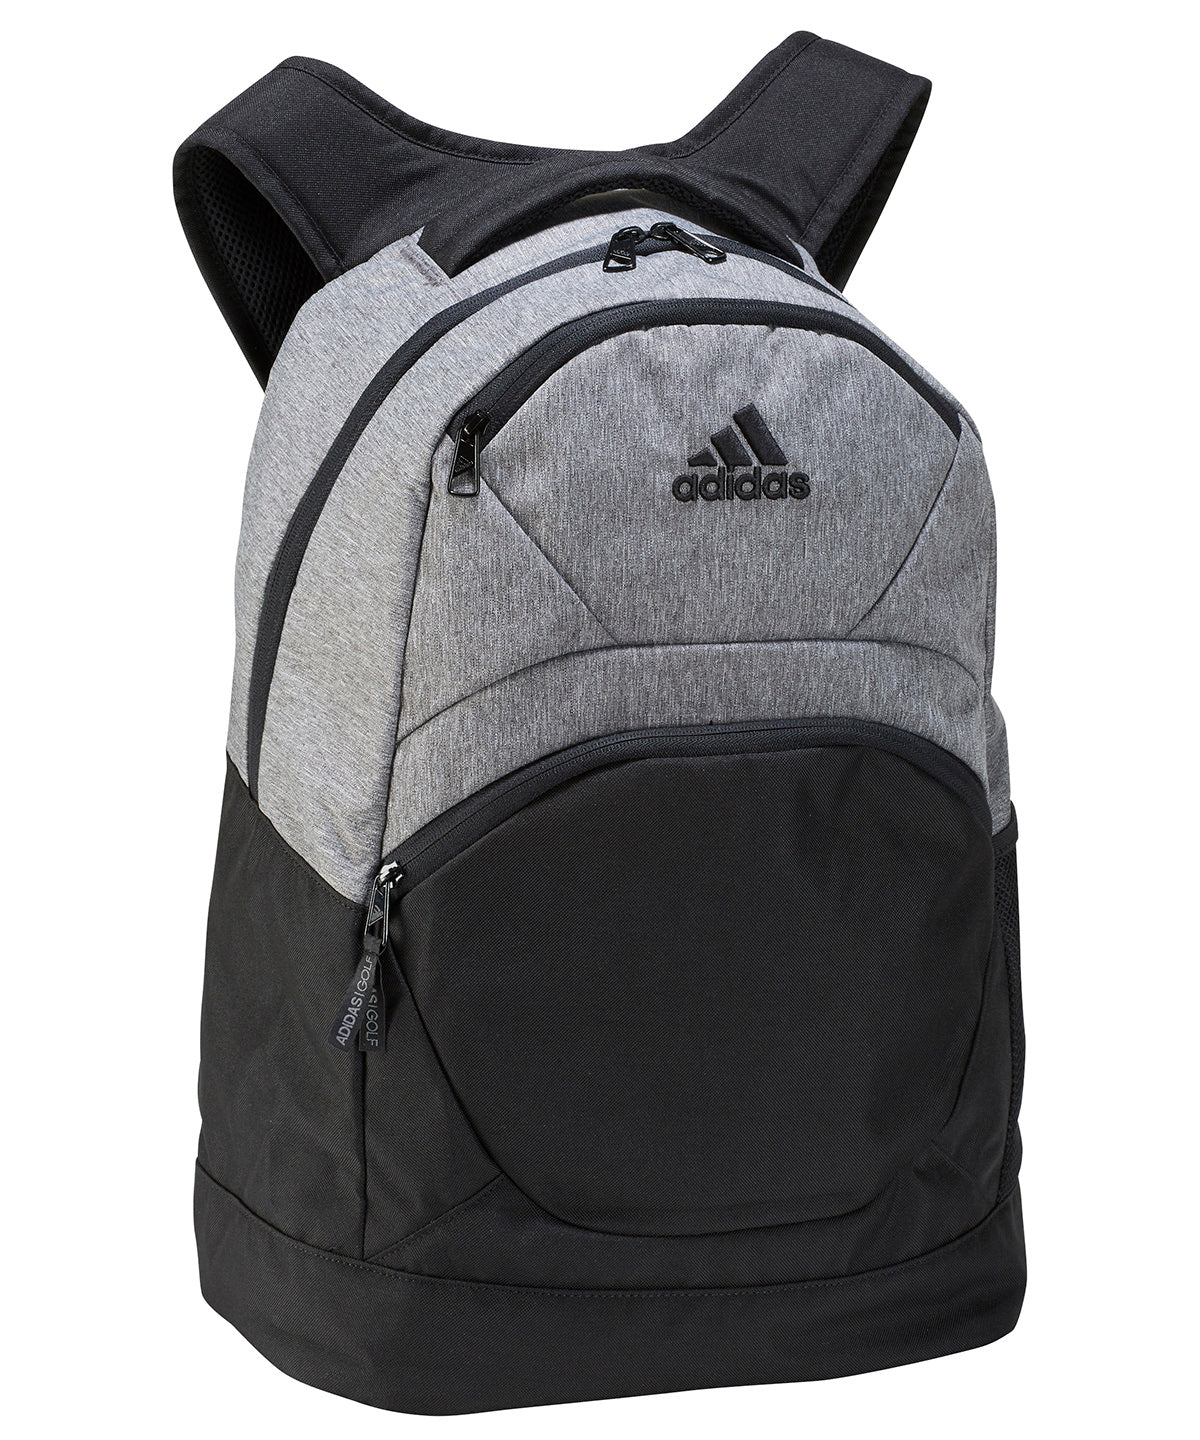 Töskur - Medium Backpack